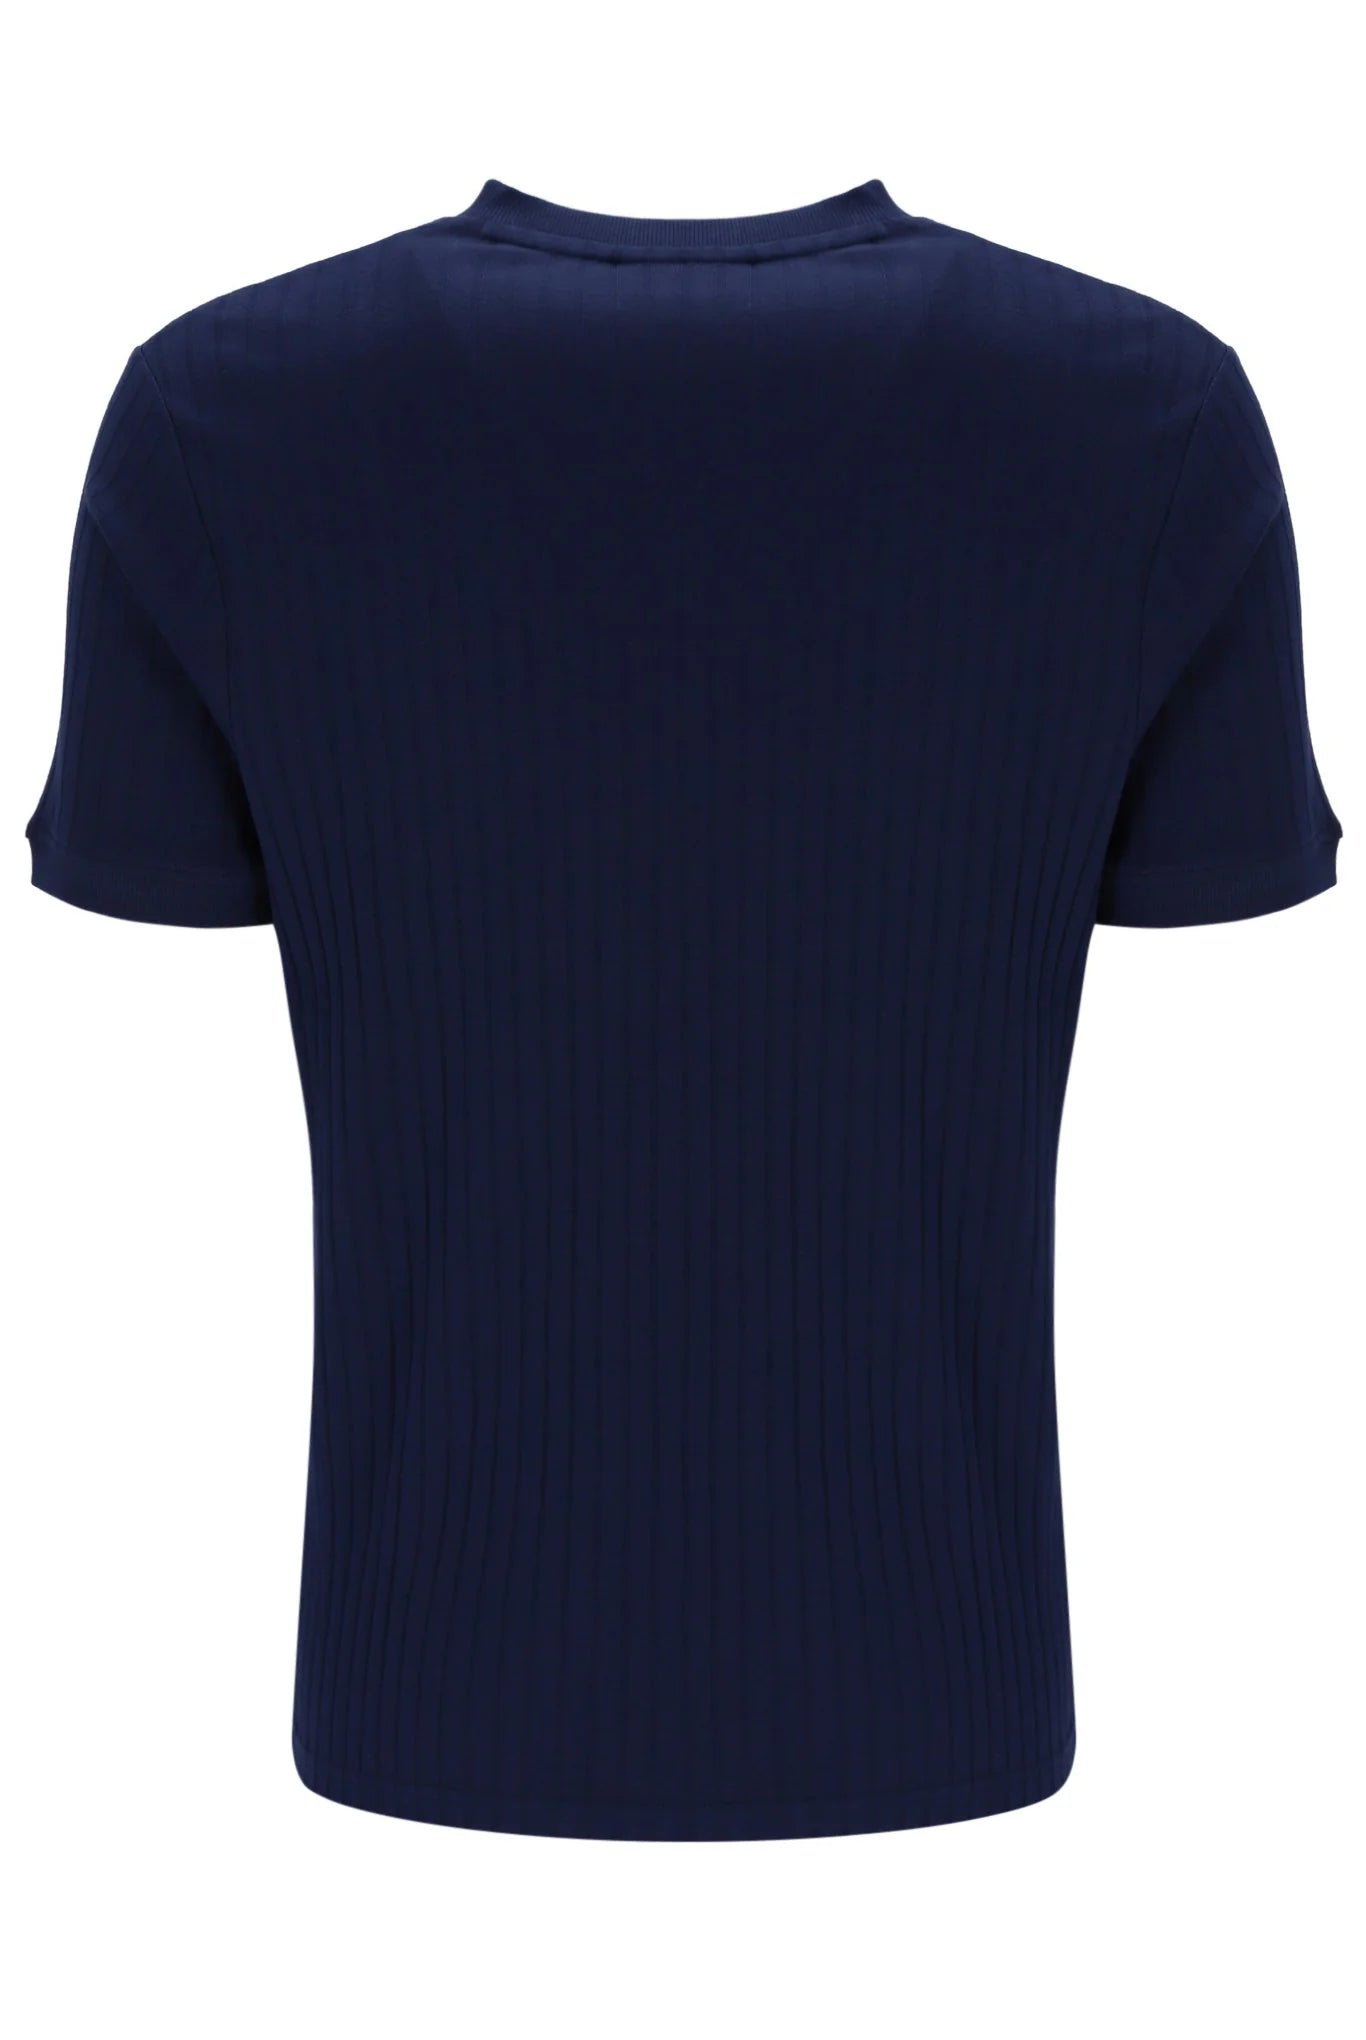 Fila Vintage Men's Easton Drop Needle T Shirt Fila Navy Blue